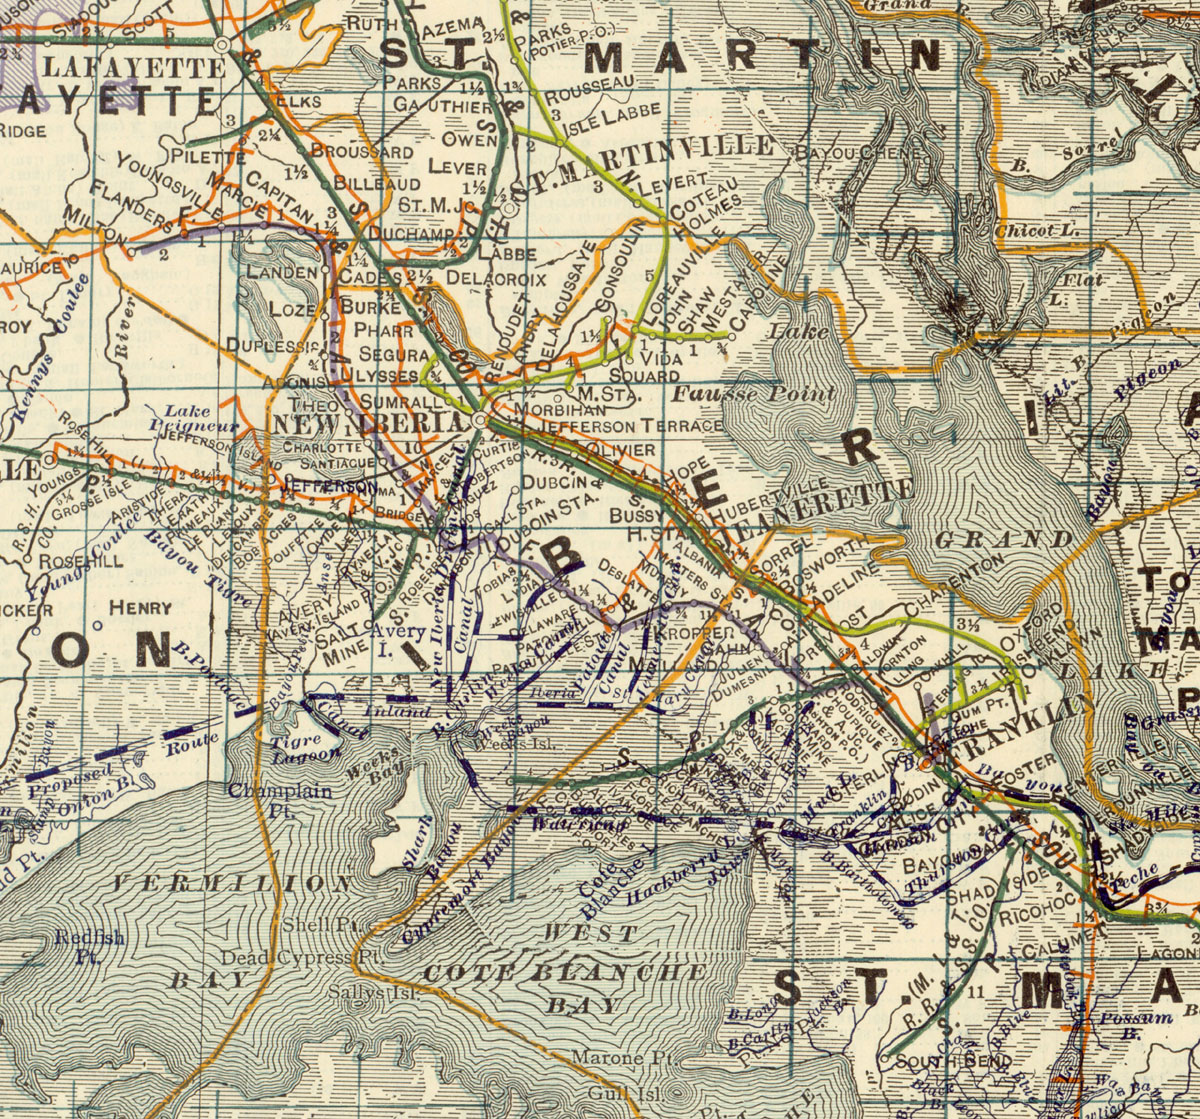 Franklin & Abbeville Railroad Co. (La.), Map Showing Route in 1922.